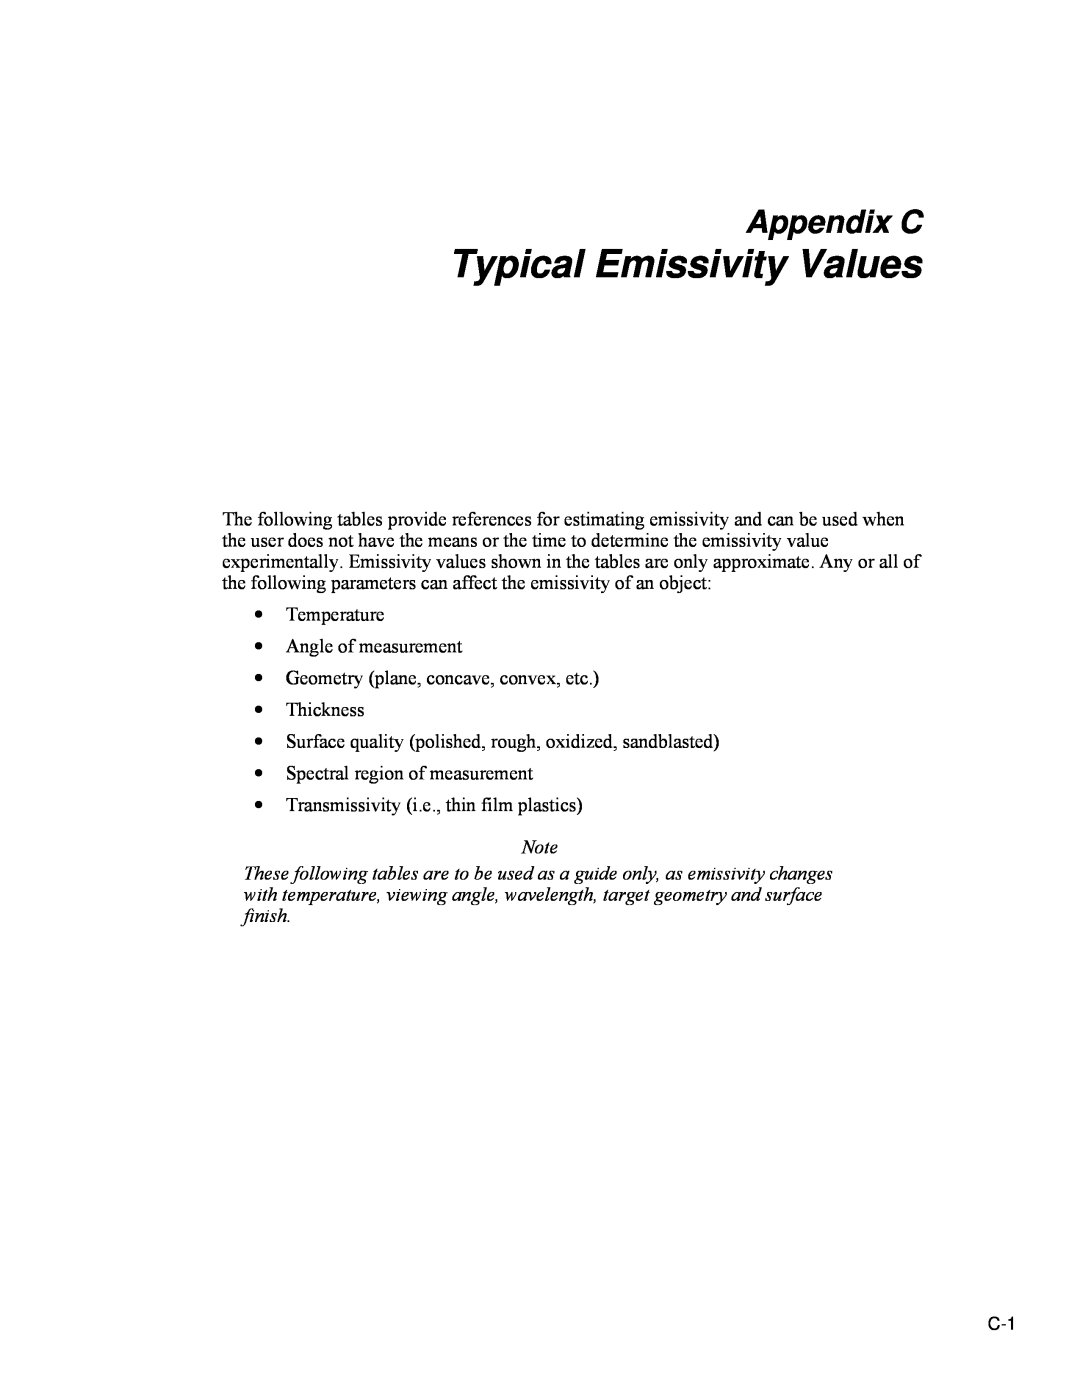 Fluke Ti20 user manual Typical Emissivity Values, Appendix C 